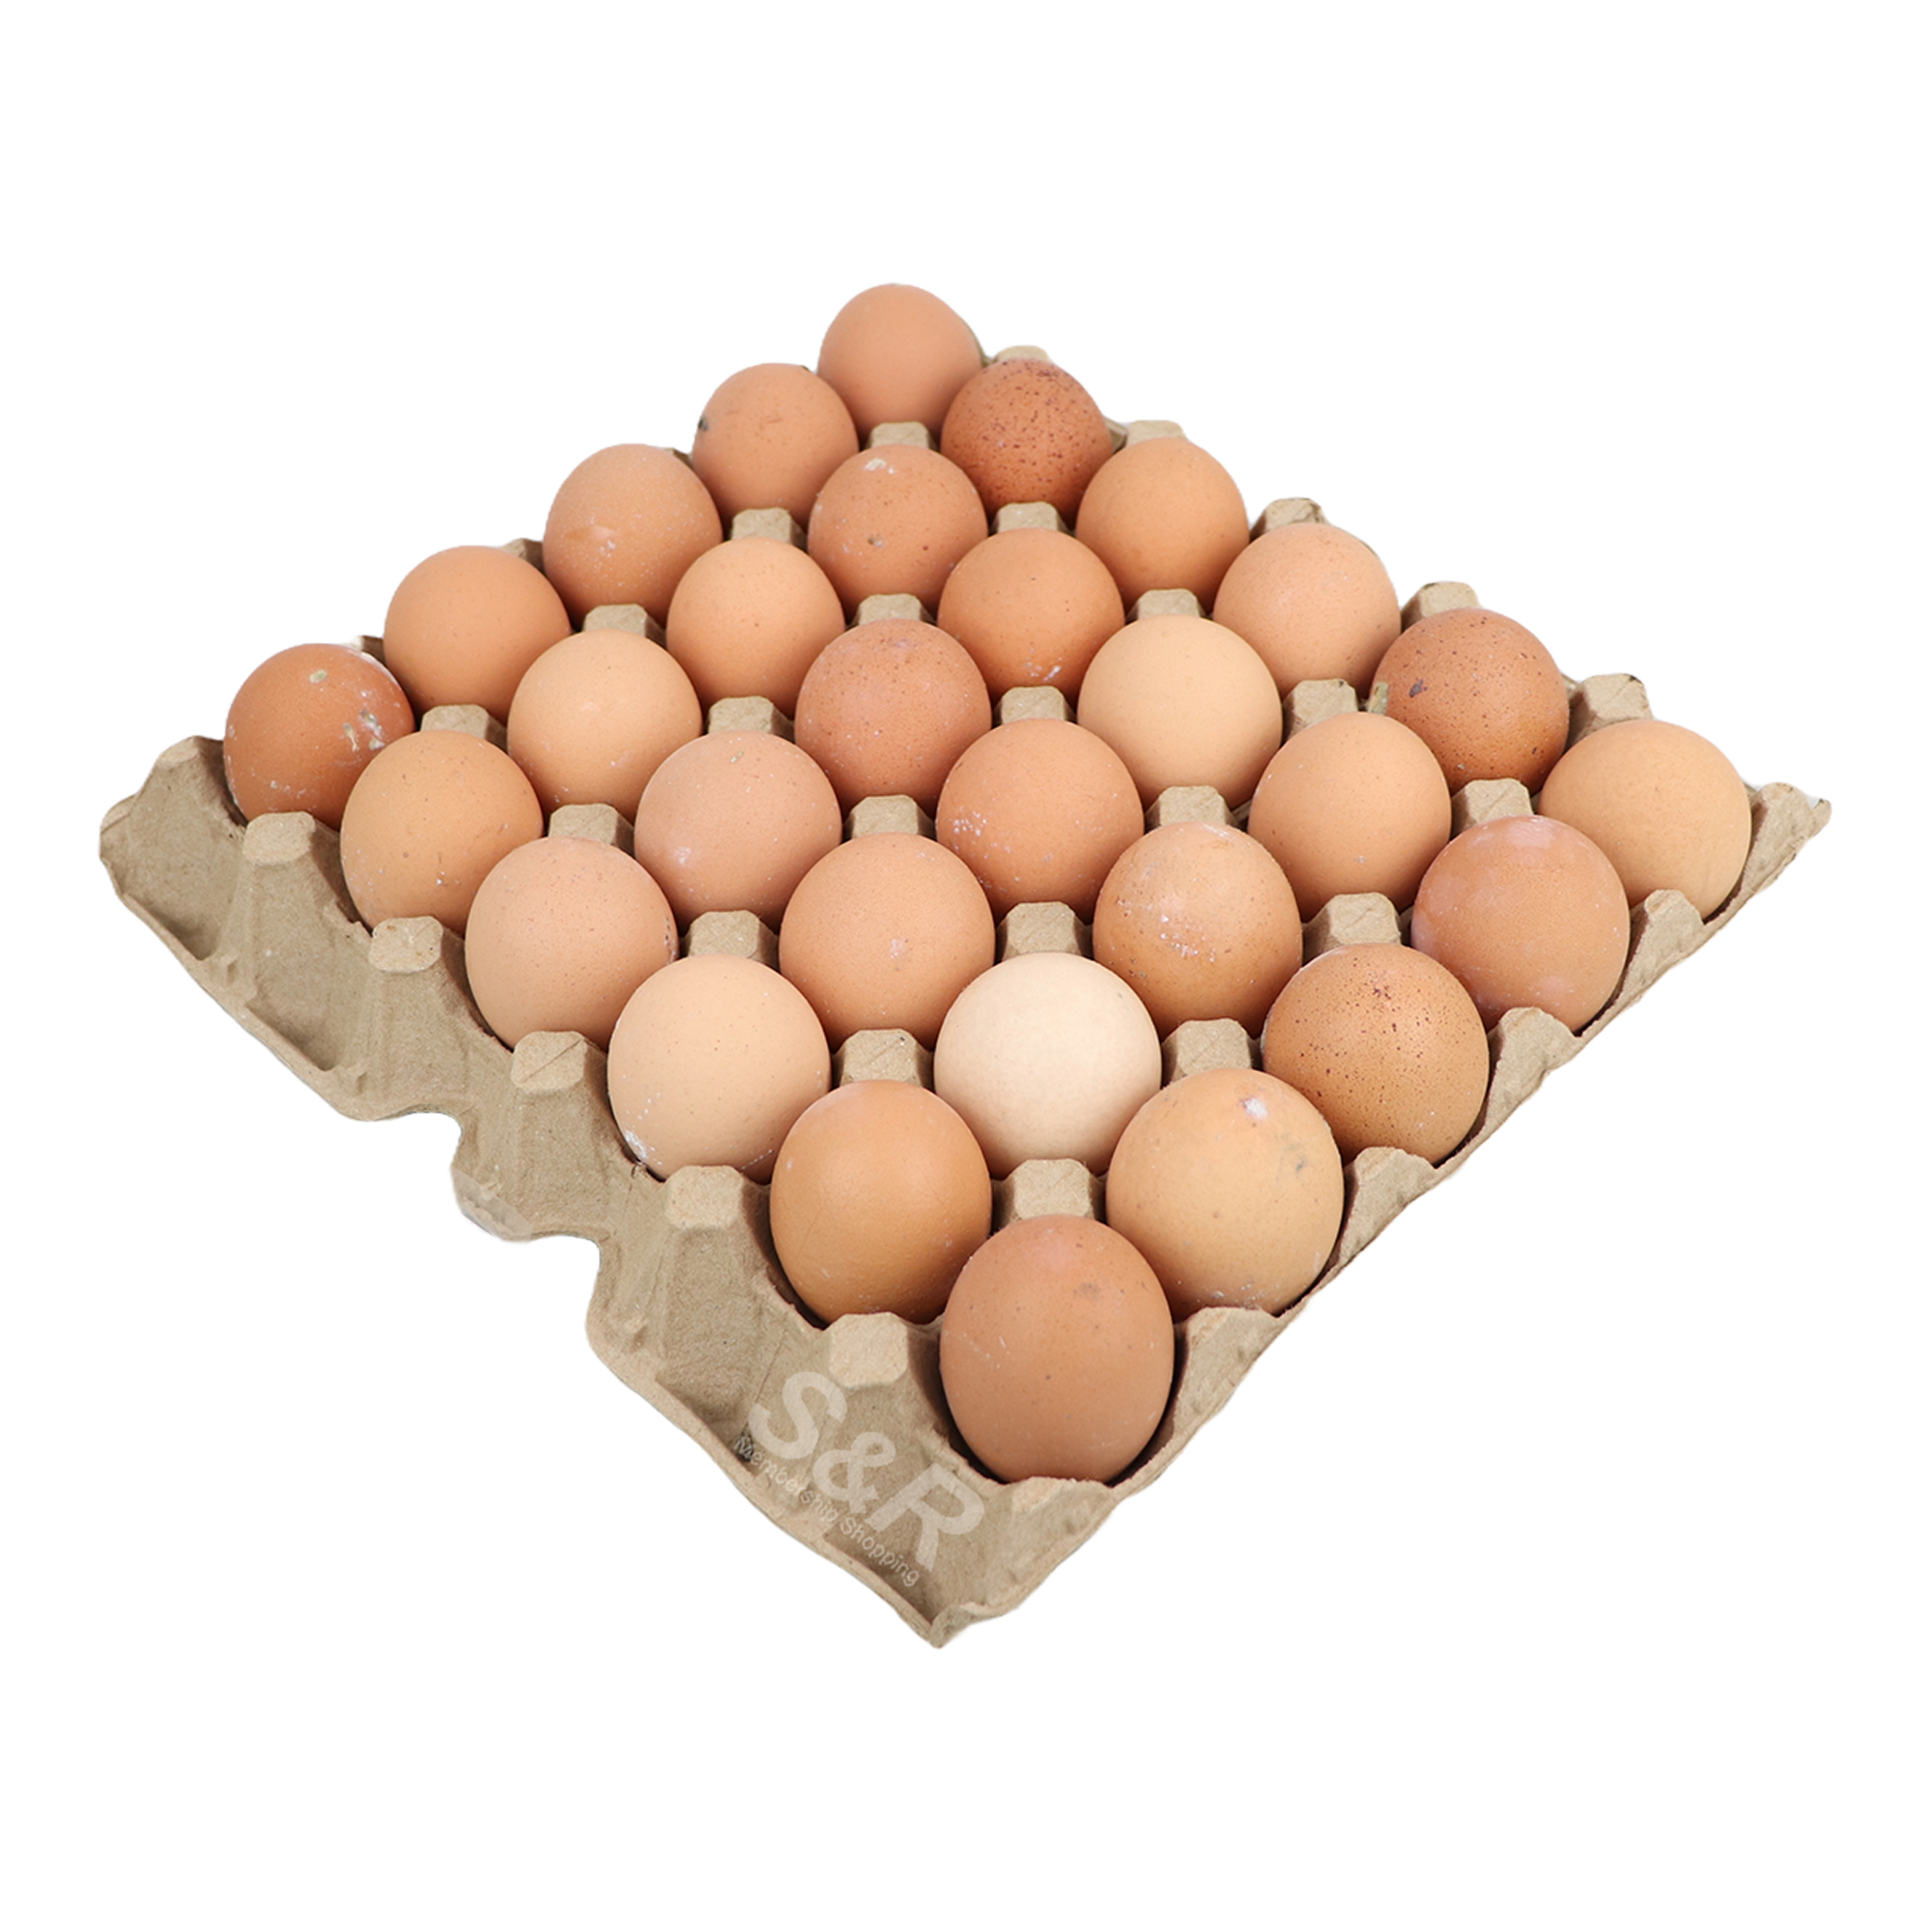 S&R Membership Shopping Morning Fresh Cage-Free Eggs 30pcs